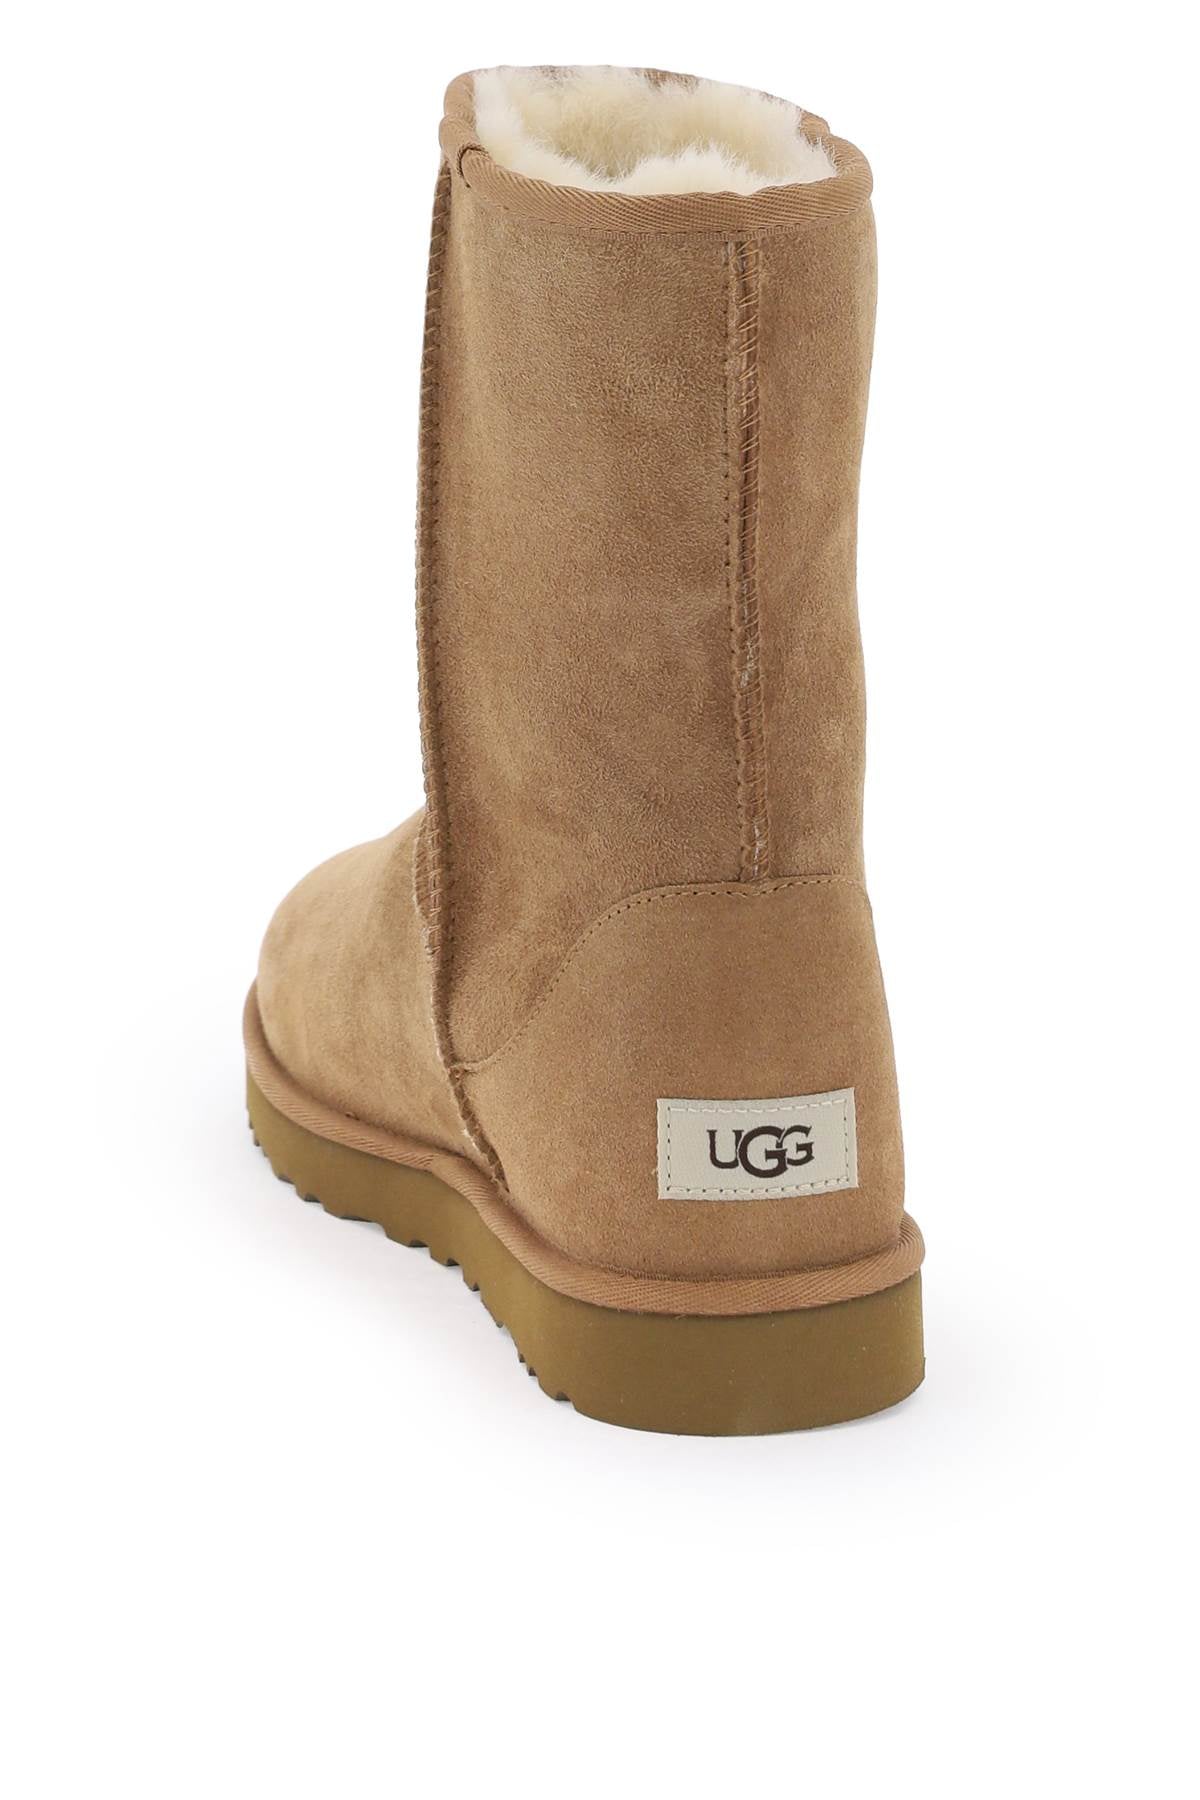 Ugg classic short boots-2